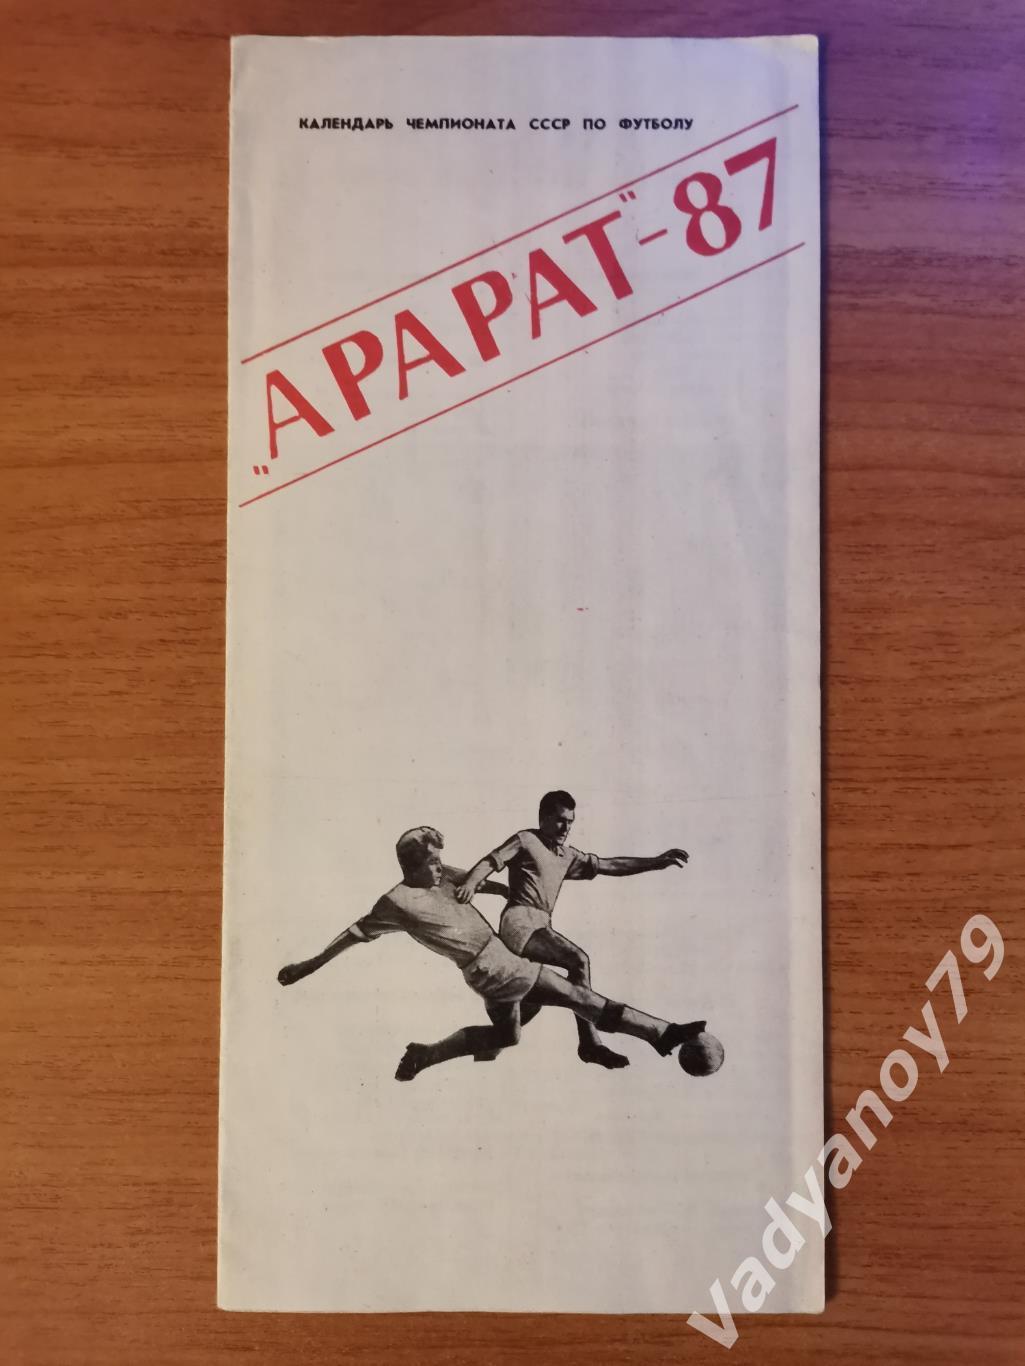 Арарат (Ереван, Армения). Календарь чемпионата СССР по футболу. 1987